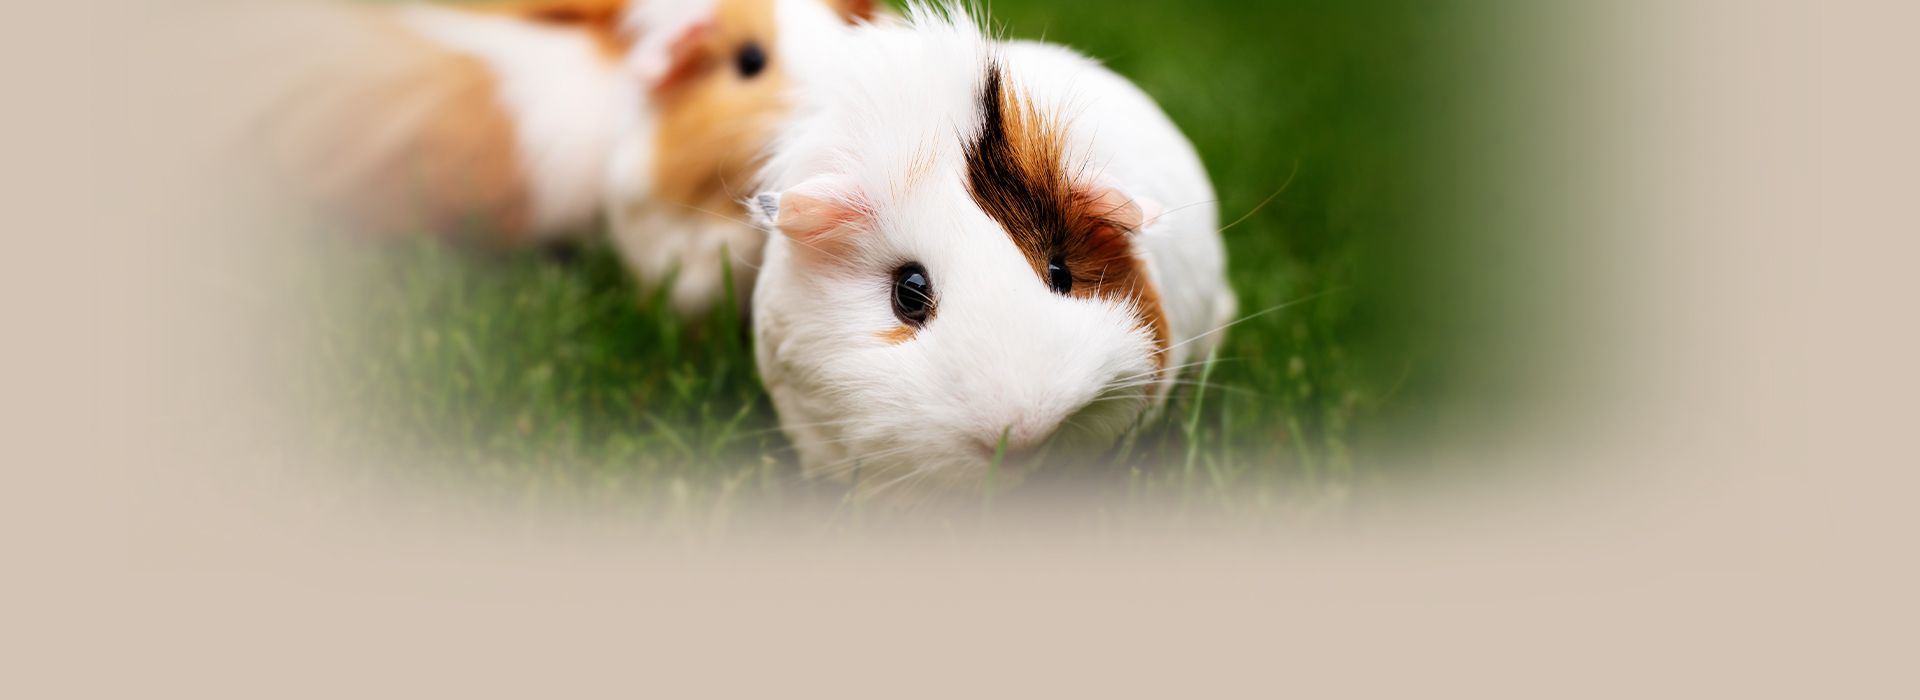 cute guinea pig eating grass